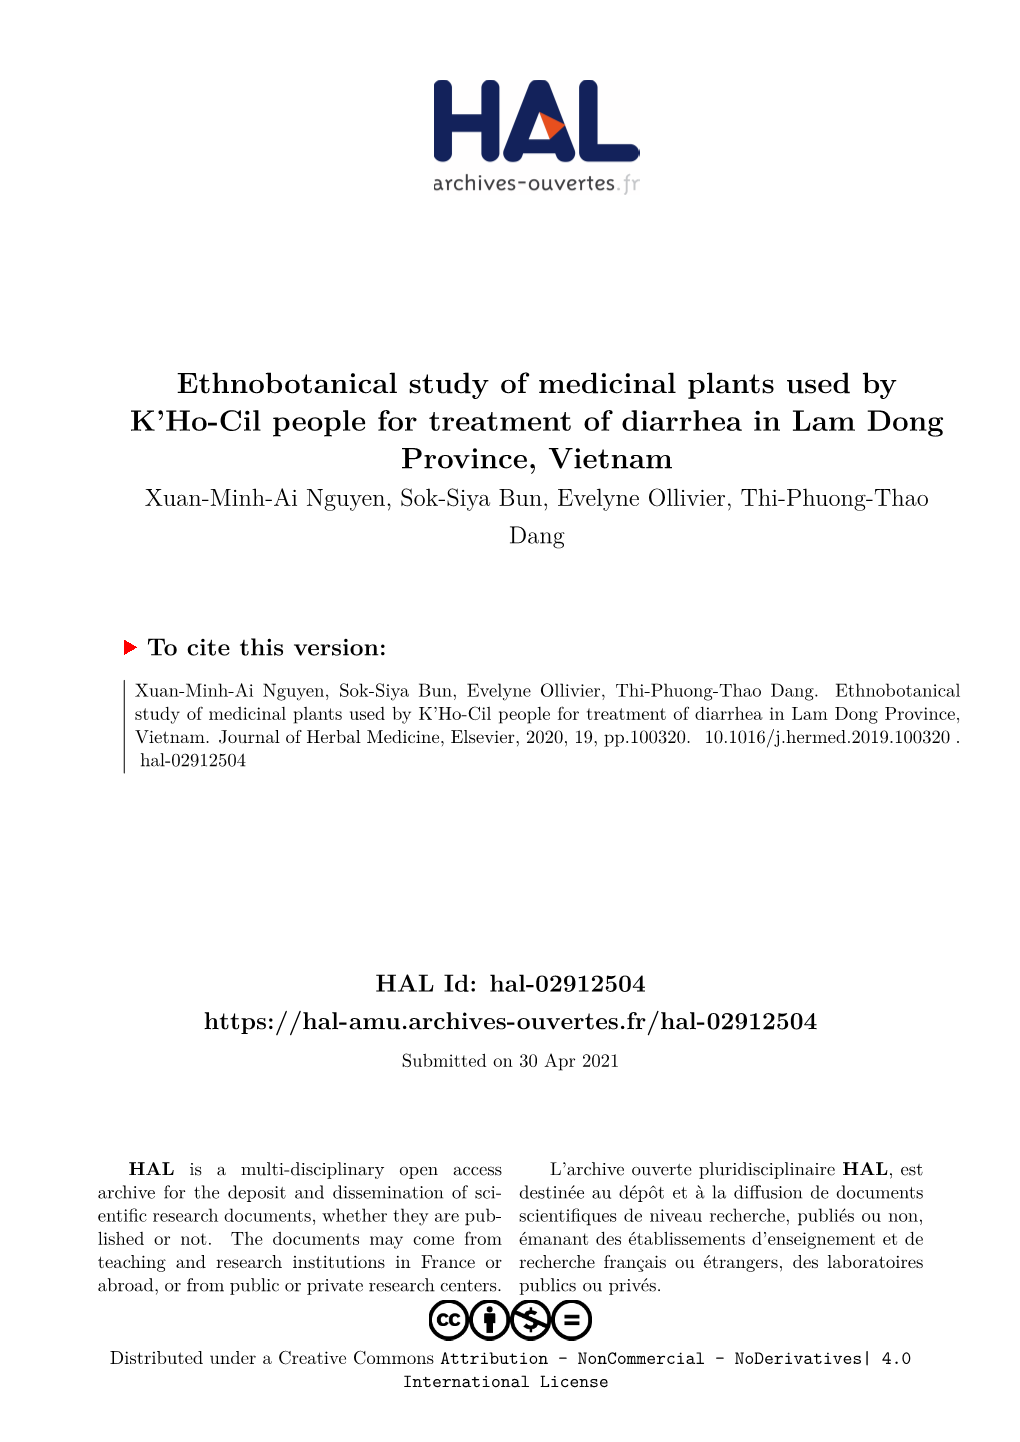 Ethnobotanical Study of Medicinal Plants Used by K'ho-Cil